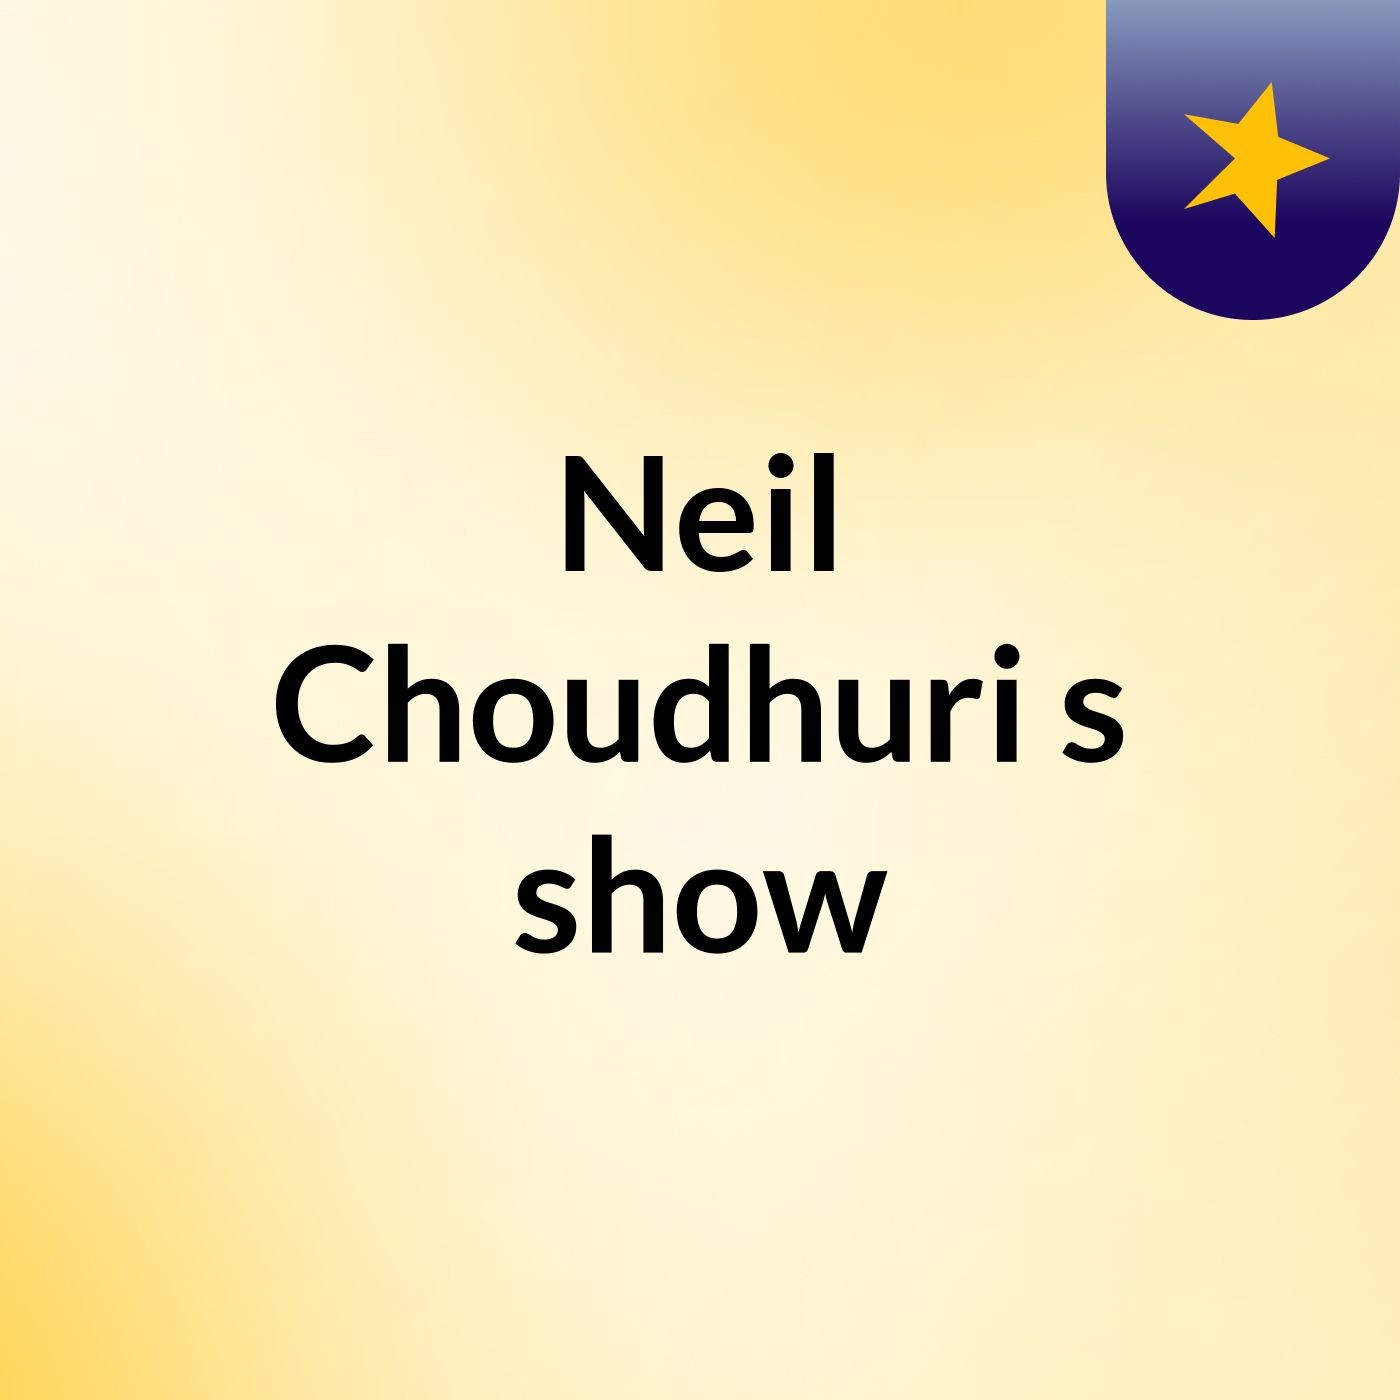 Episode 4 - Neil Choudhuri's show